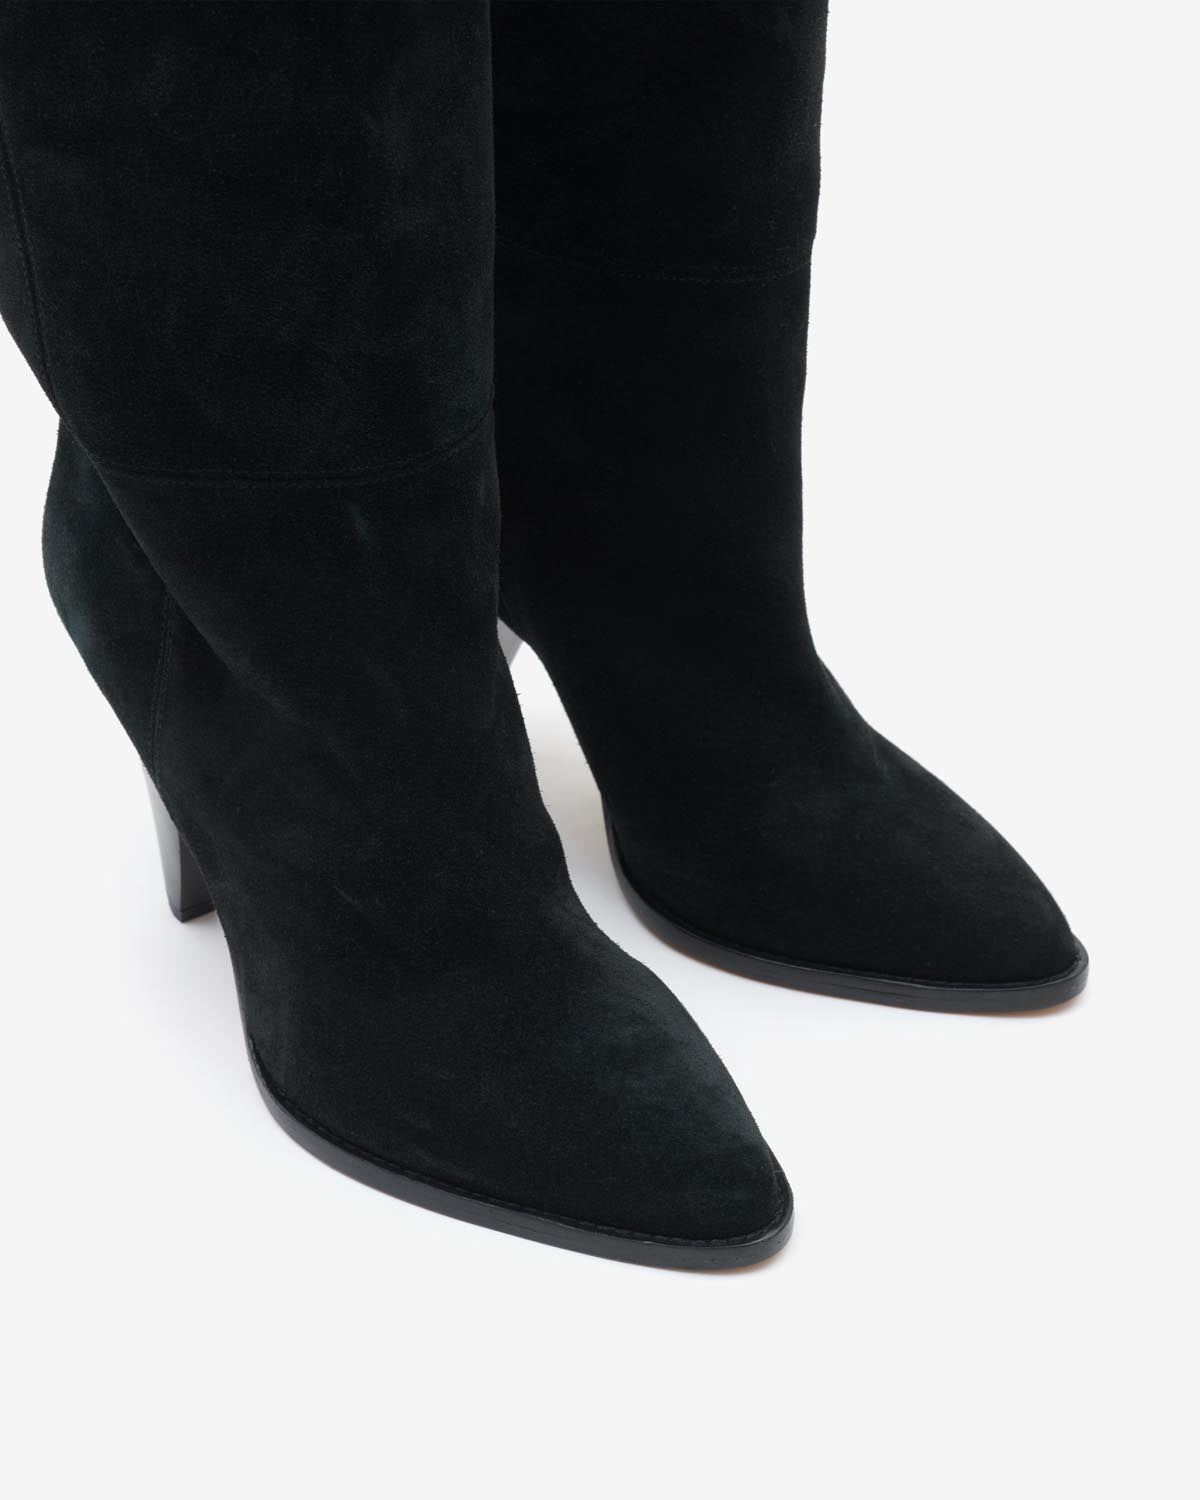 Ririo boots Woman Black 1